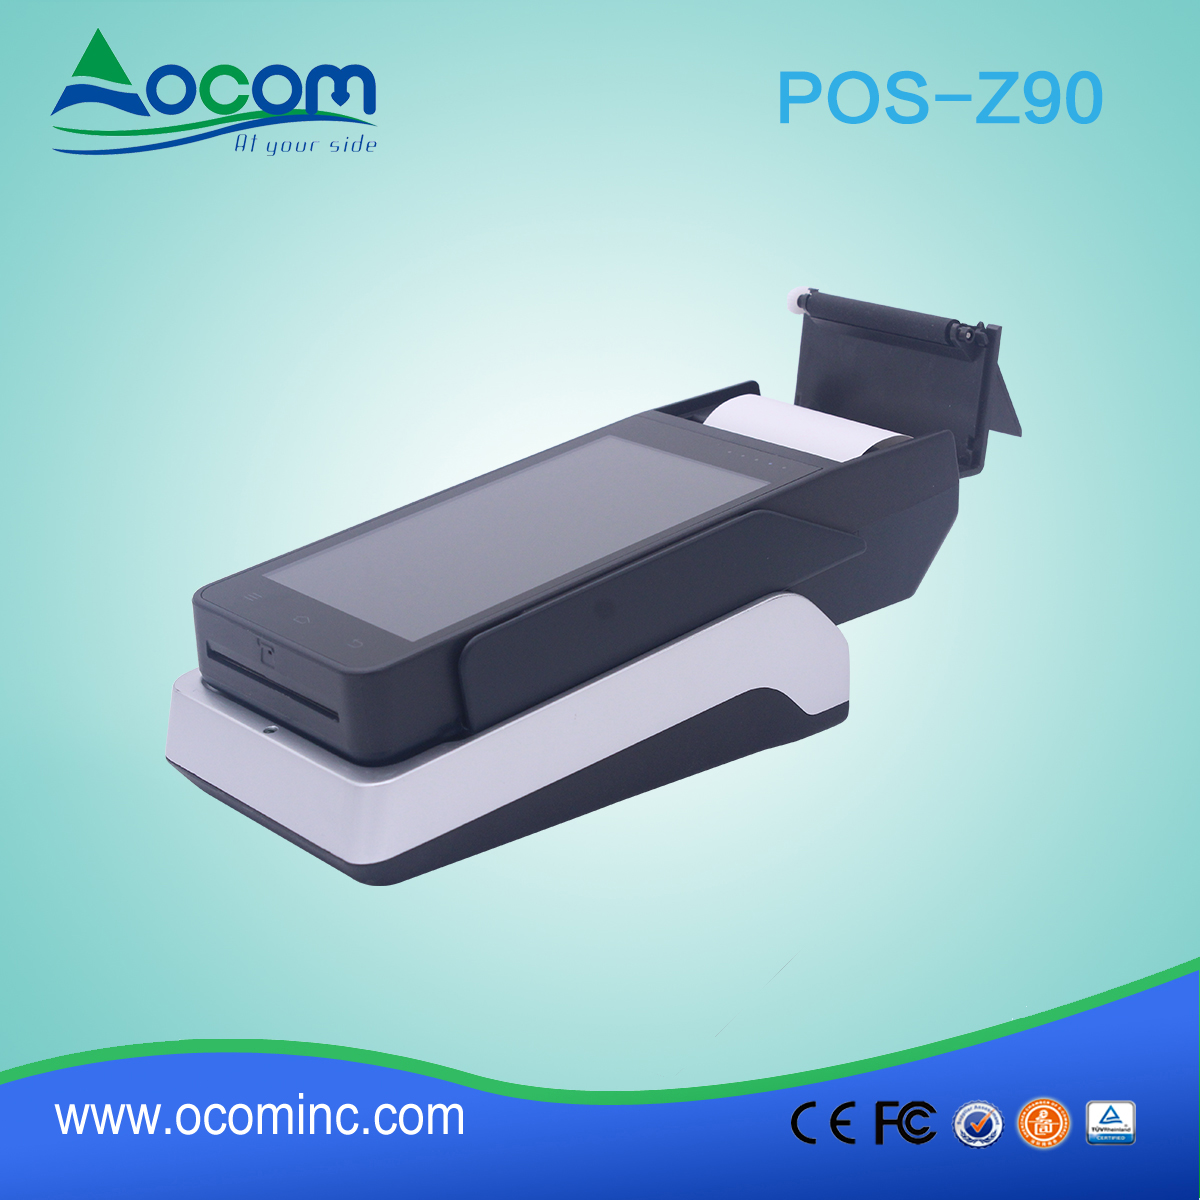 OCOM POS -Z90打印机和nfc阅读器掌上电脑全和部在一个安卓pos终端